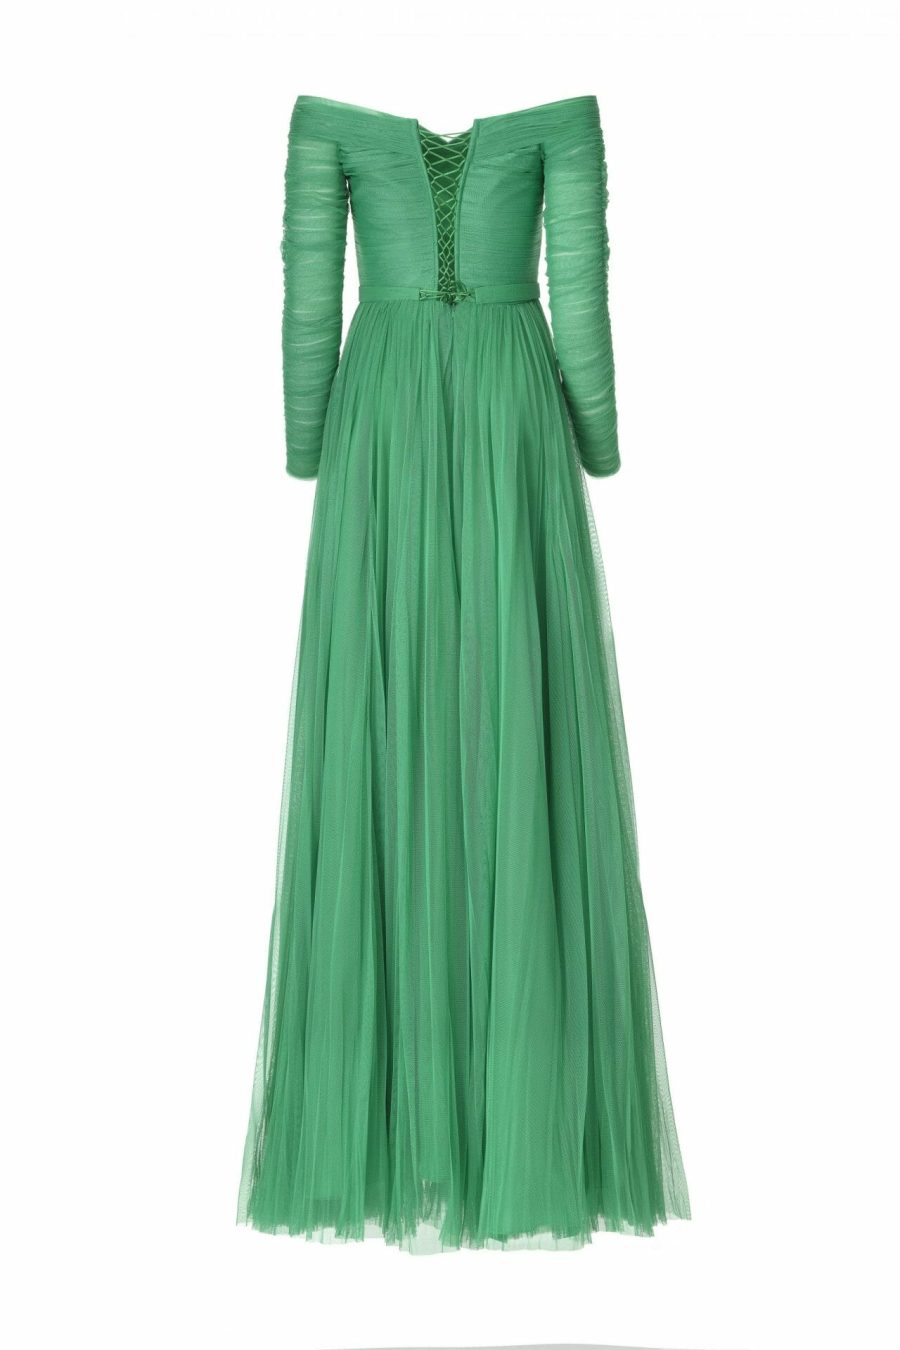 Flare Banquet Lyrical Rochie lunga verde smarald cu maneci drapate - Ana Radu -Fashion